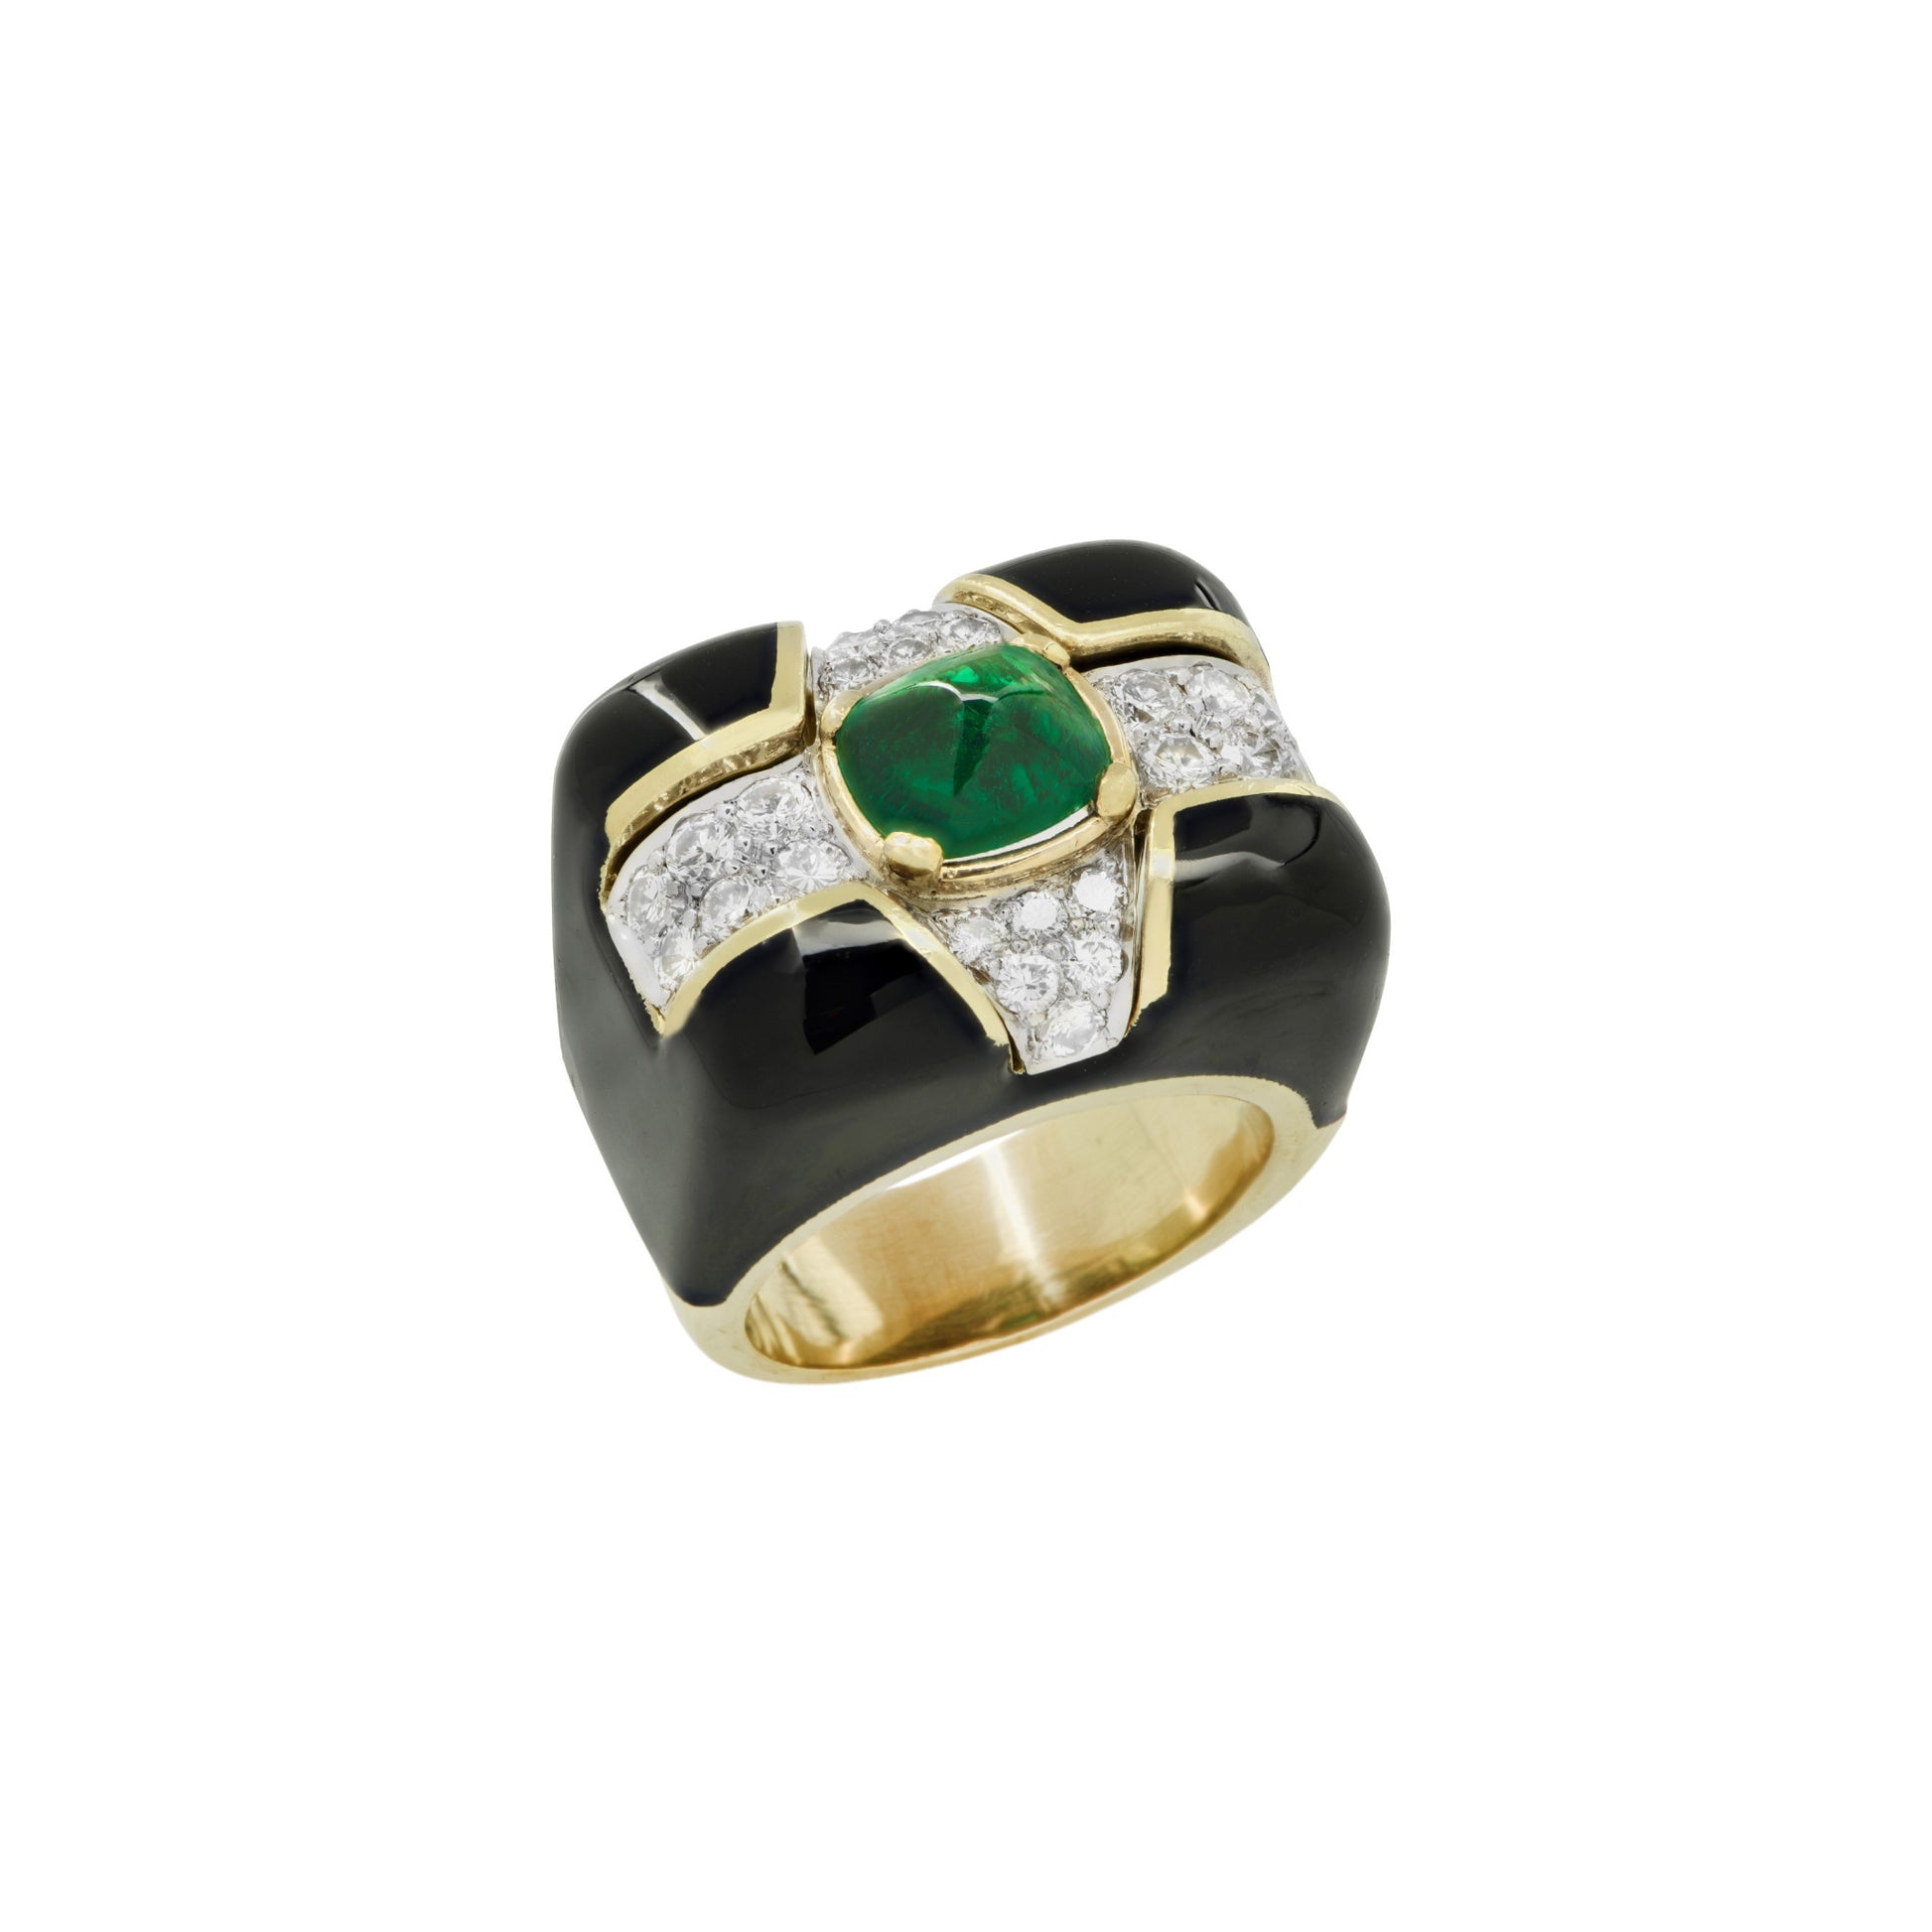 1980s 18KT White & Yellow Gold Emerald, Diamond & Enamel Ring top